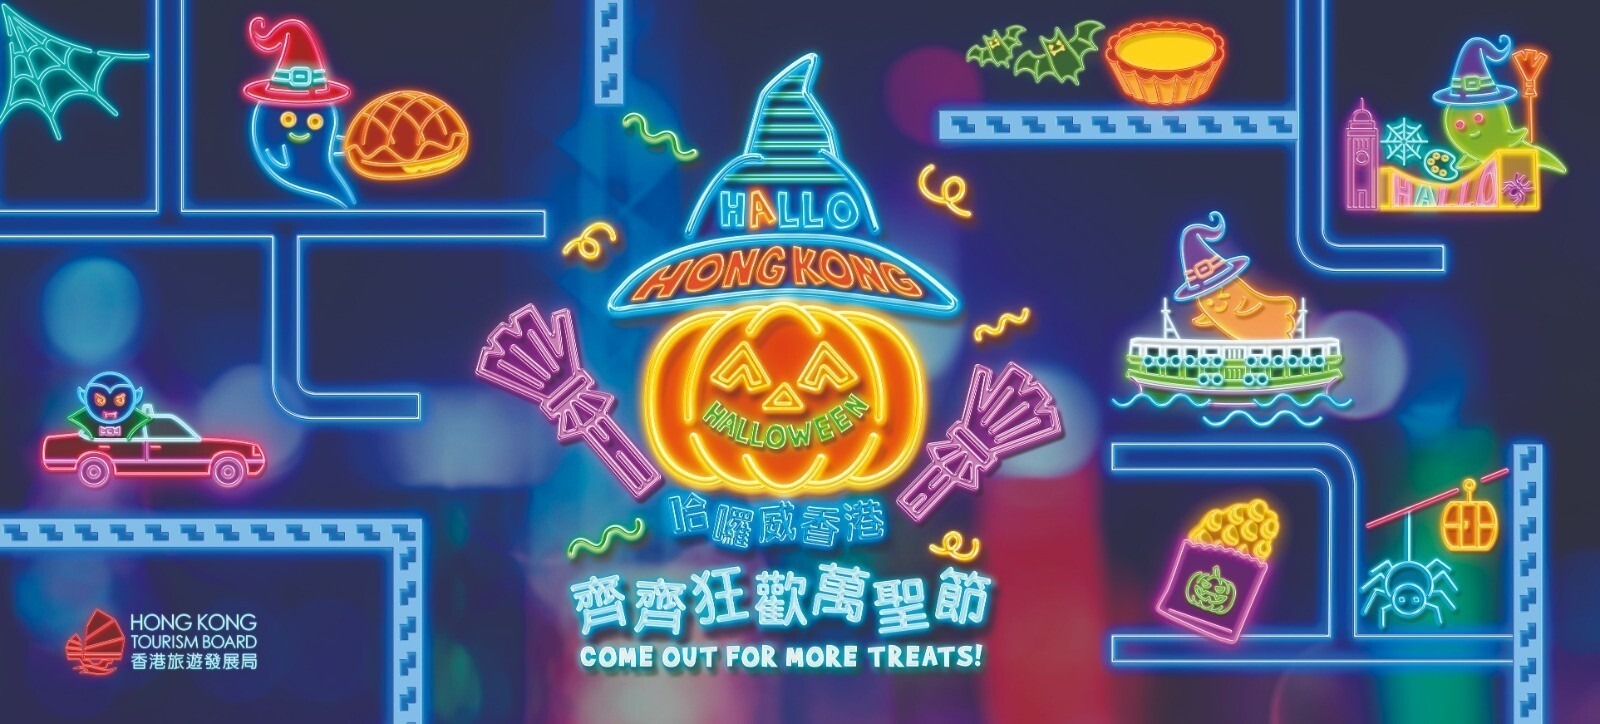 HKTB launches ‘Hallo Hong Kong Halloween’ Campaign